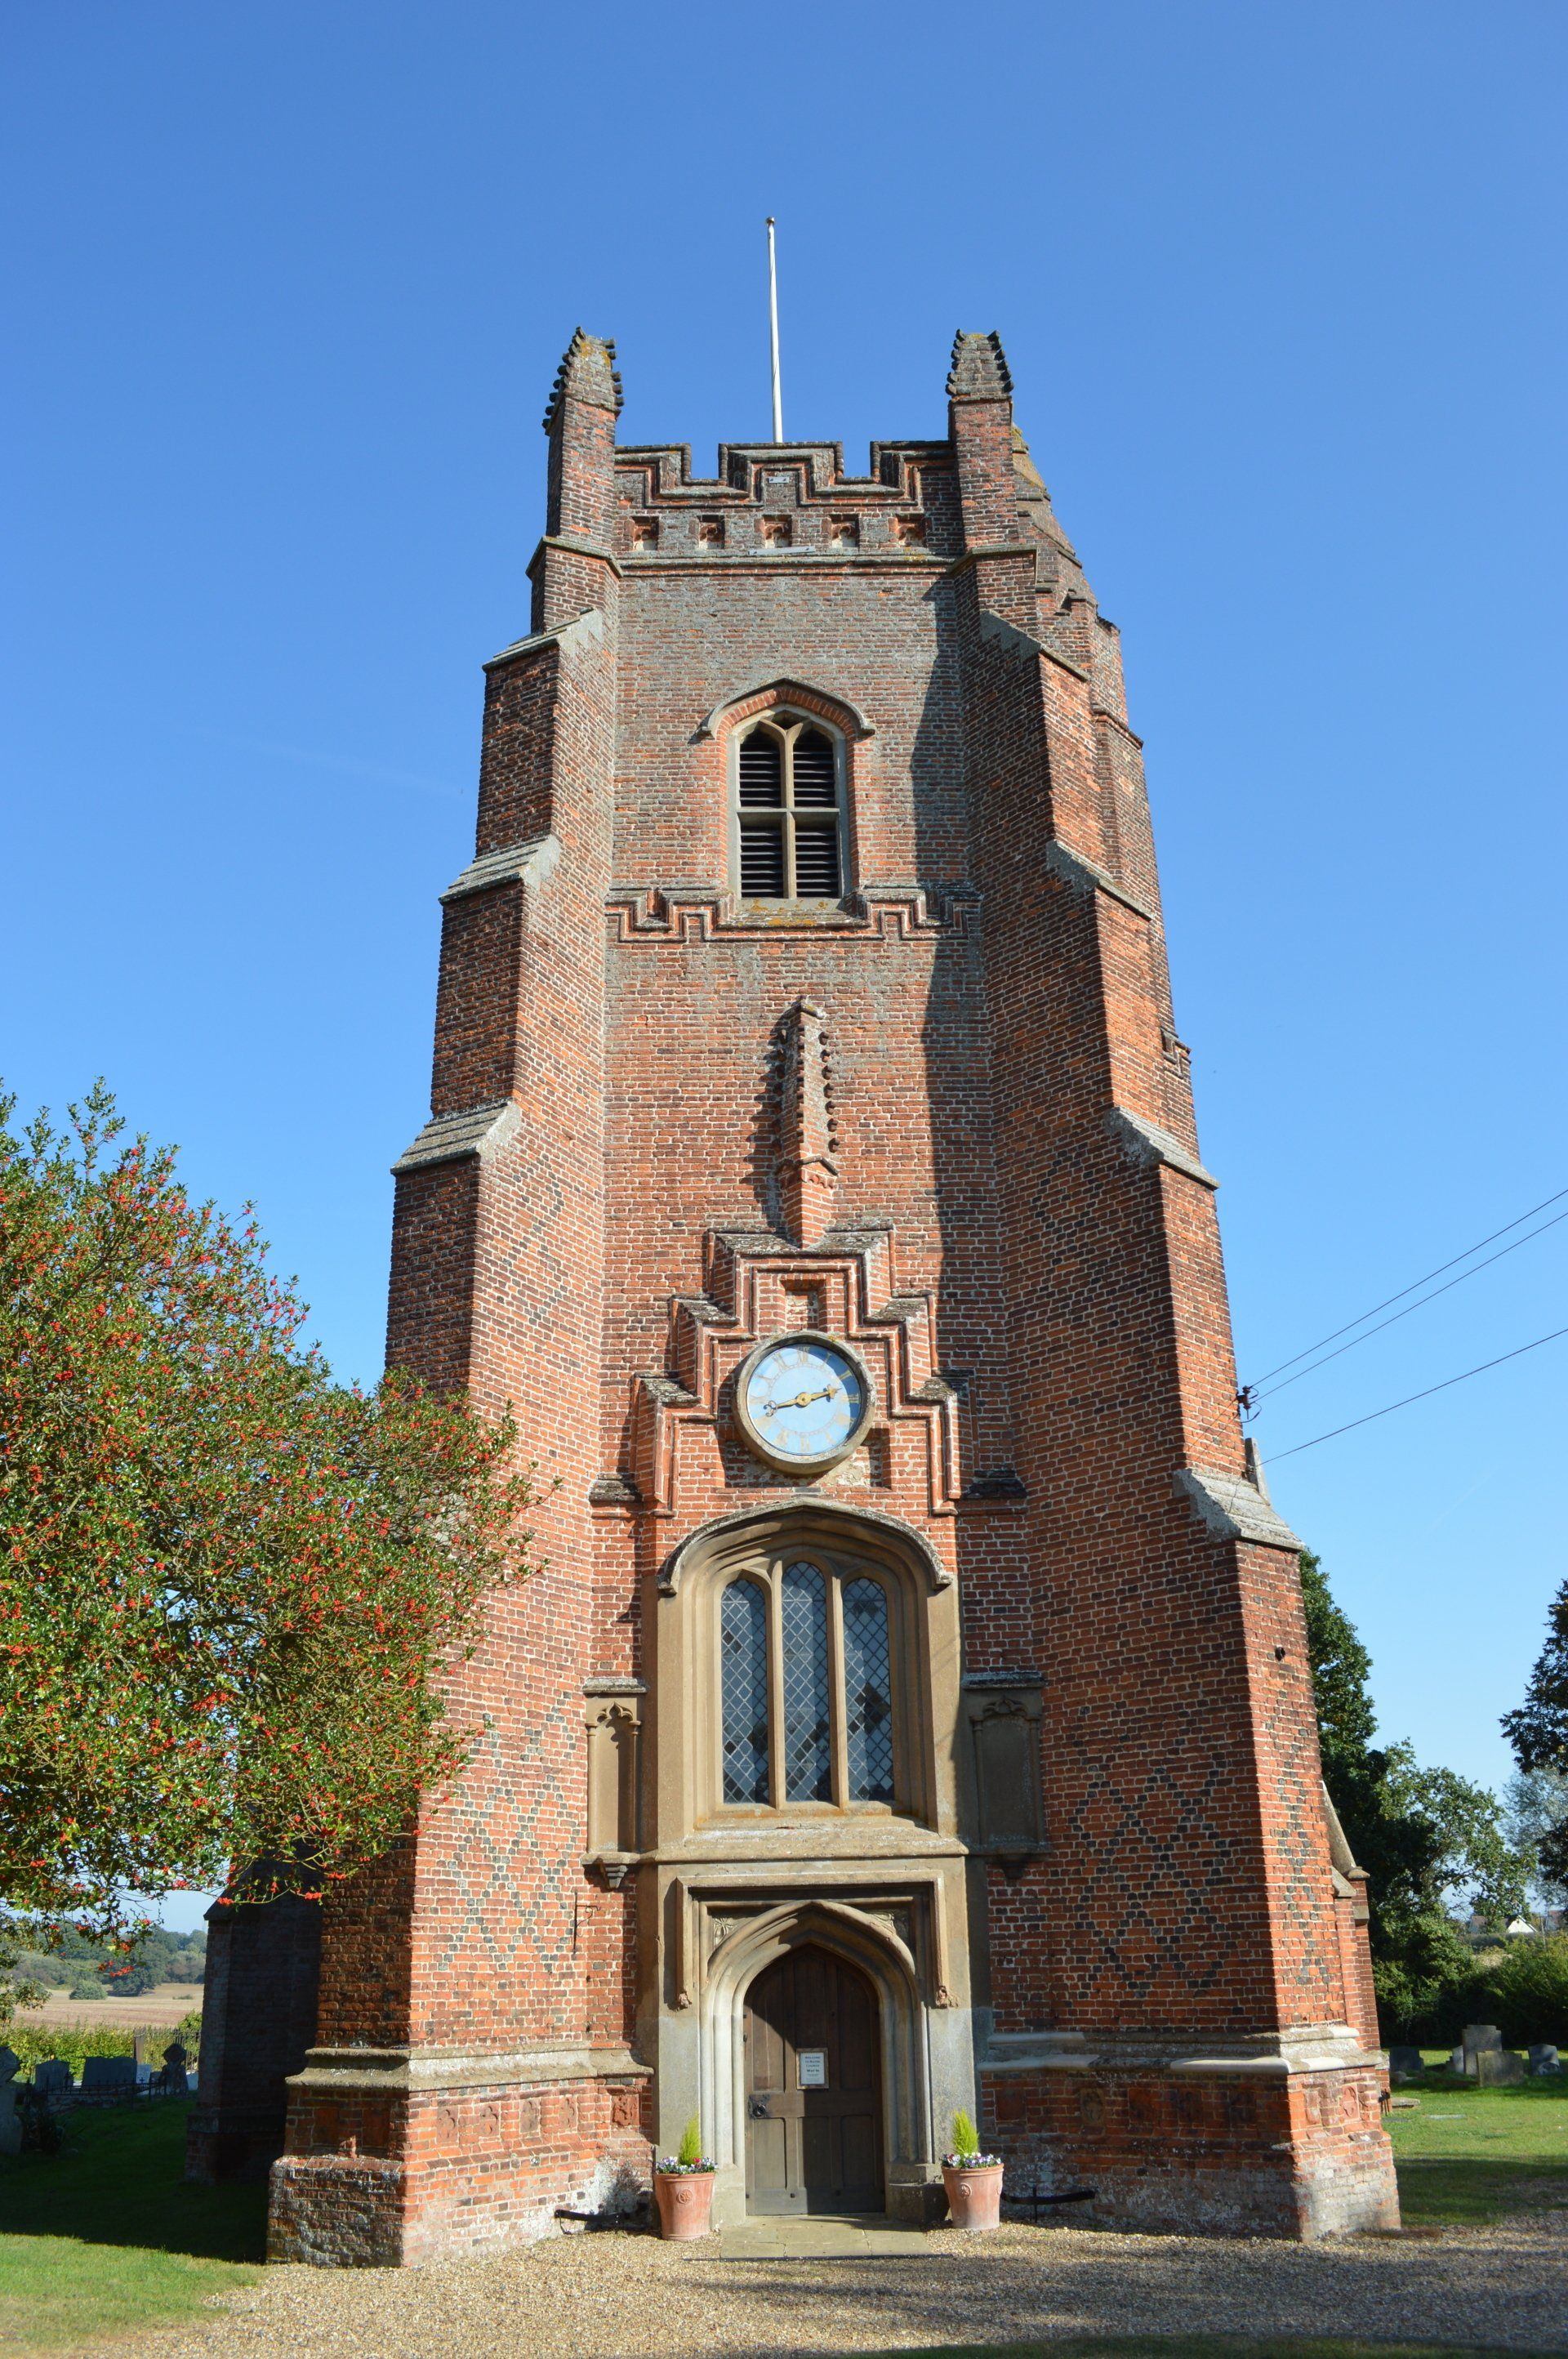 Tudor Tower